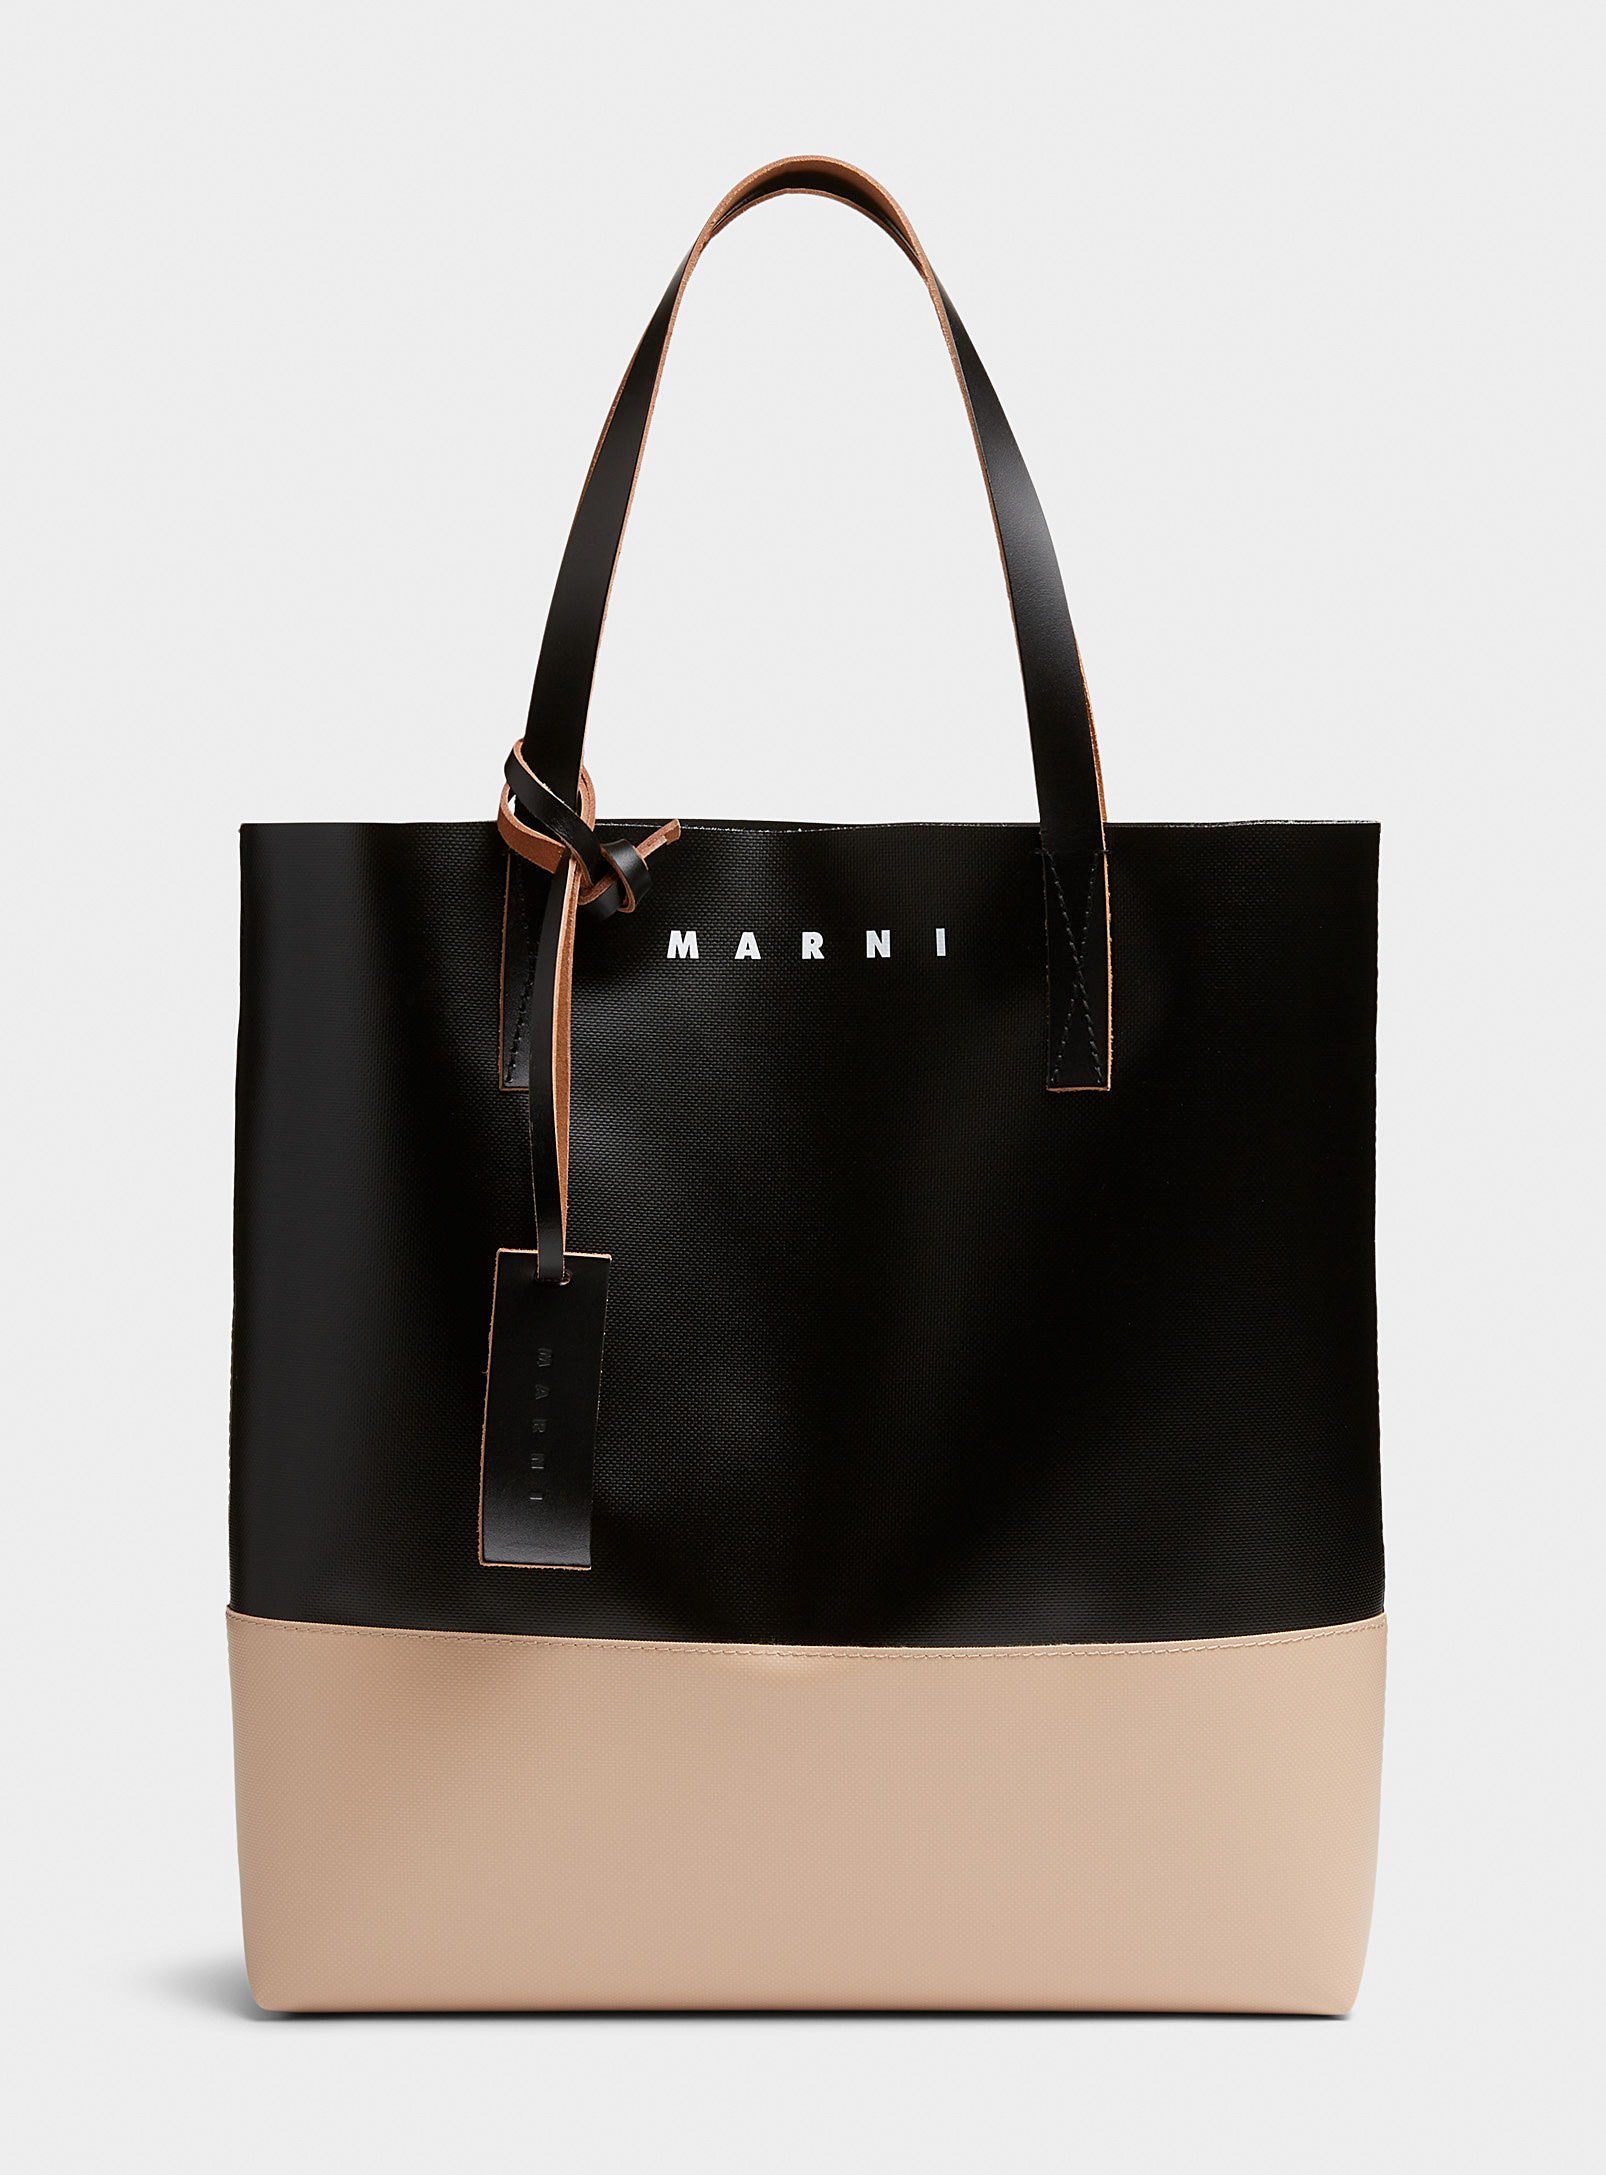 MARNI - Women's Tribeca two-tone tote bag